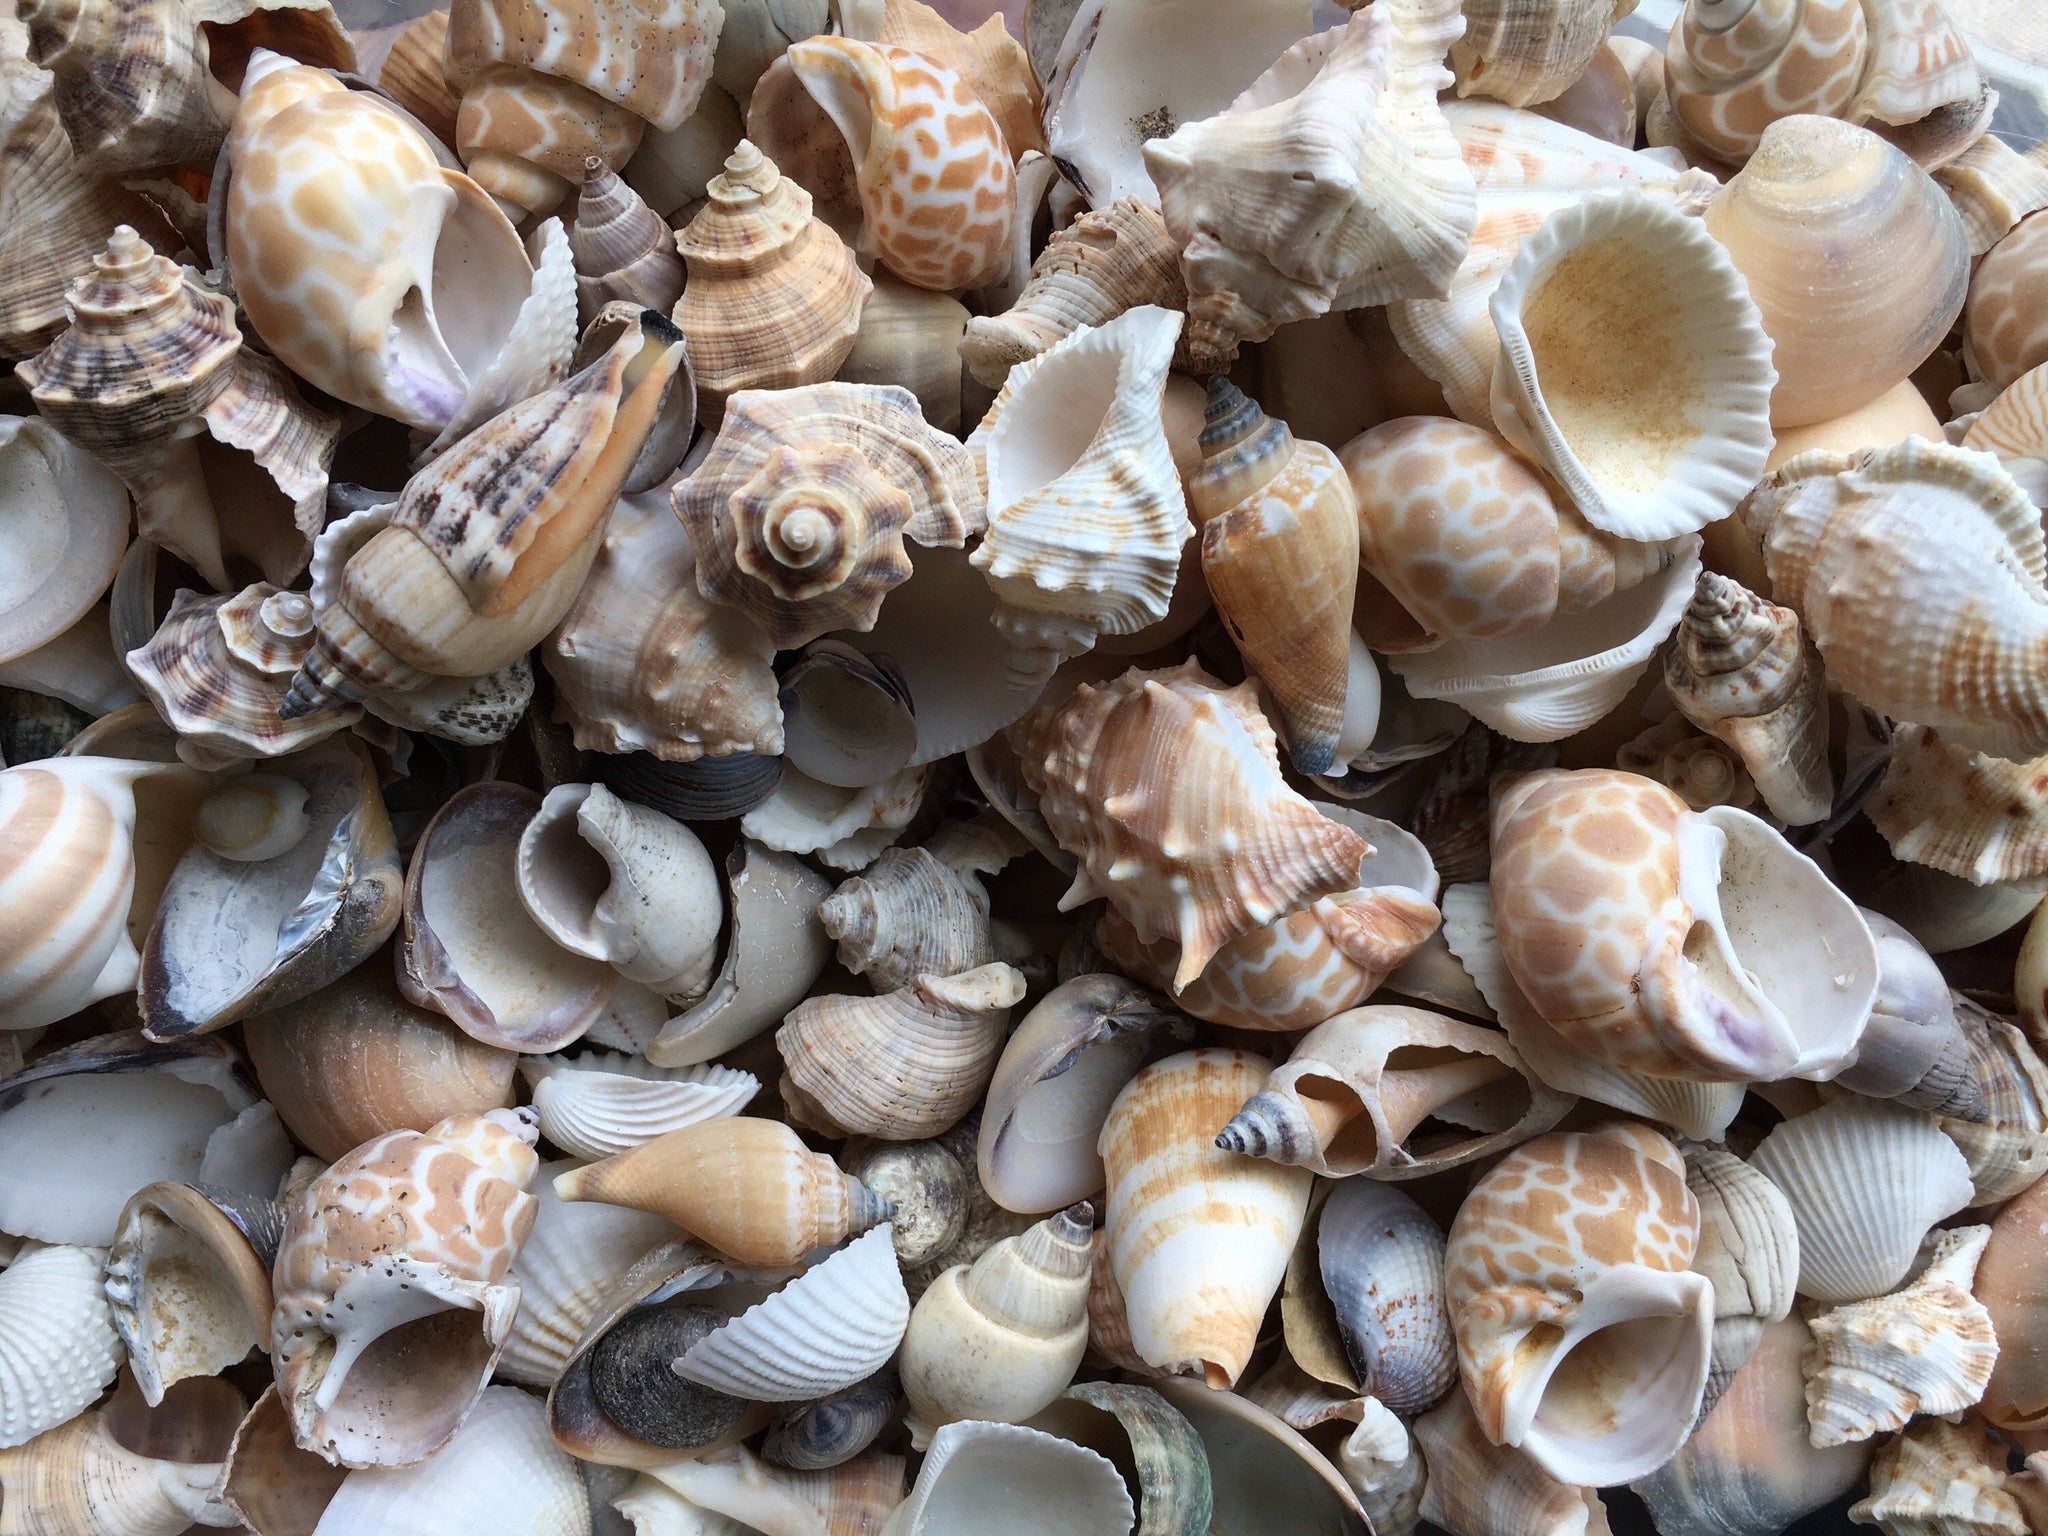 25 Mixed Florida Sea Shells Beach Crafting Seashells Coral Large Decorative